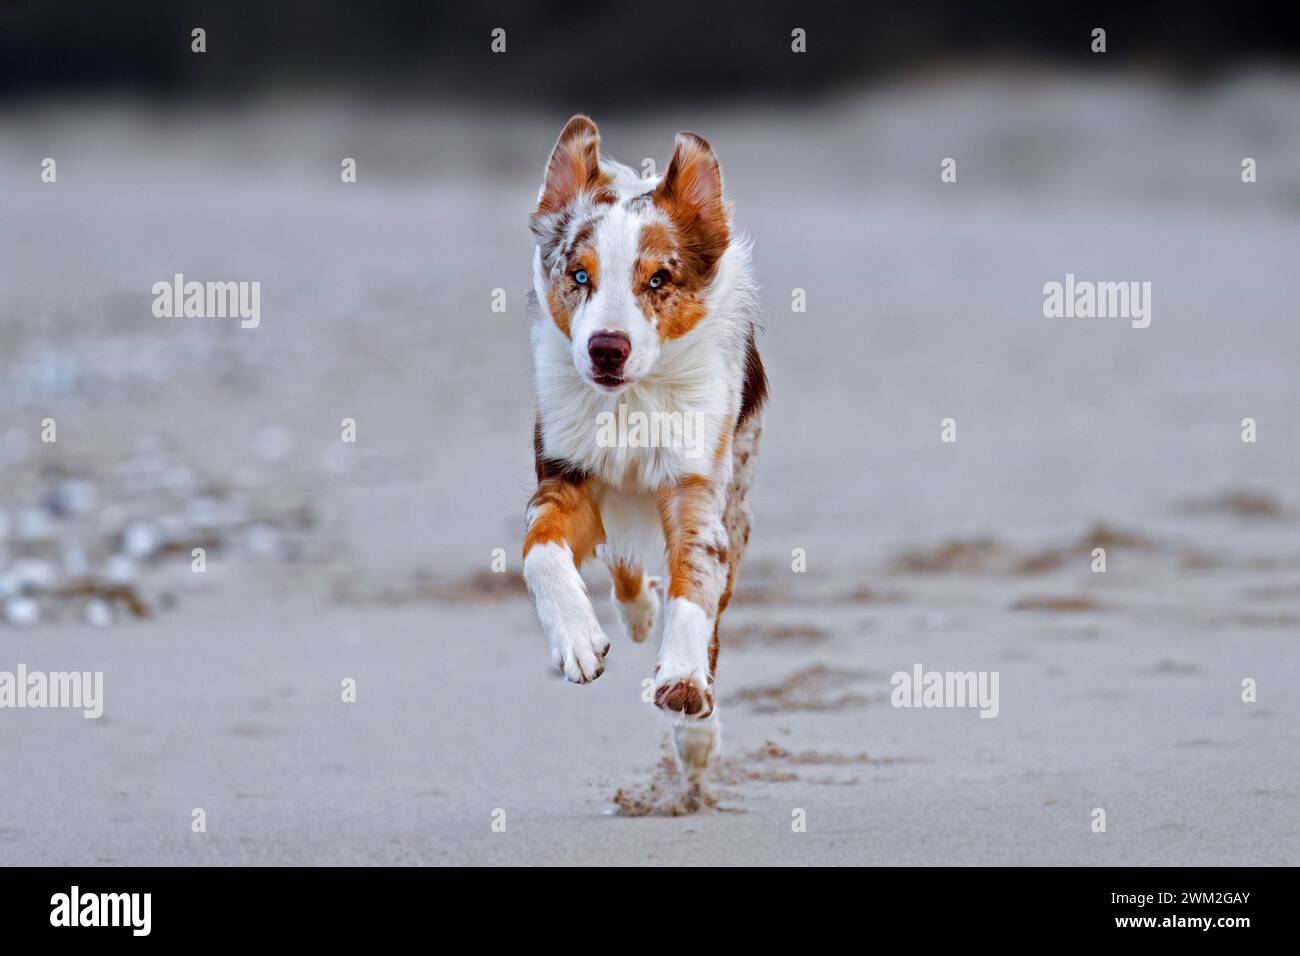 Australian Shepherd / Aussie, breed of herding dog from the United States, running on sandy beach Stock Photo